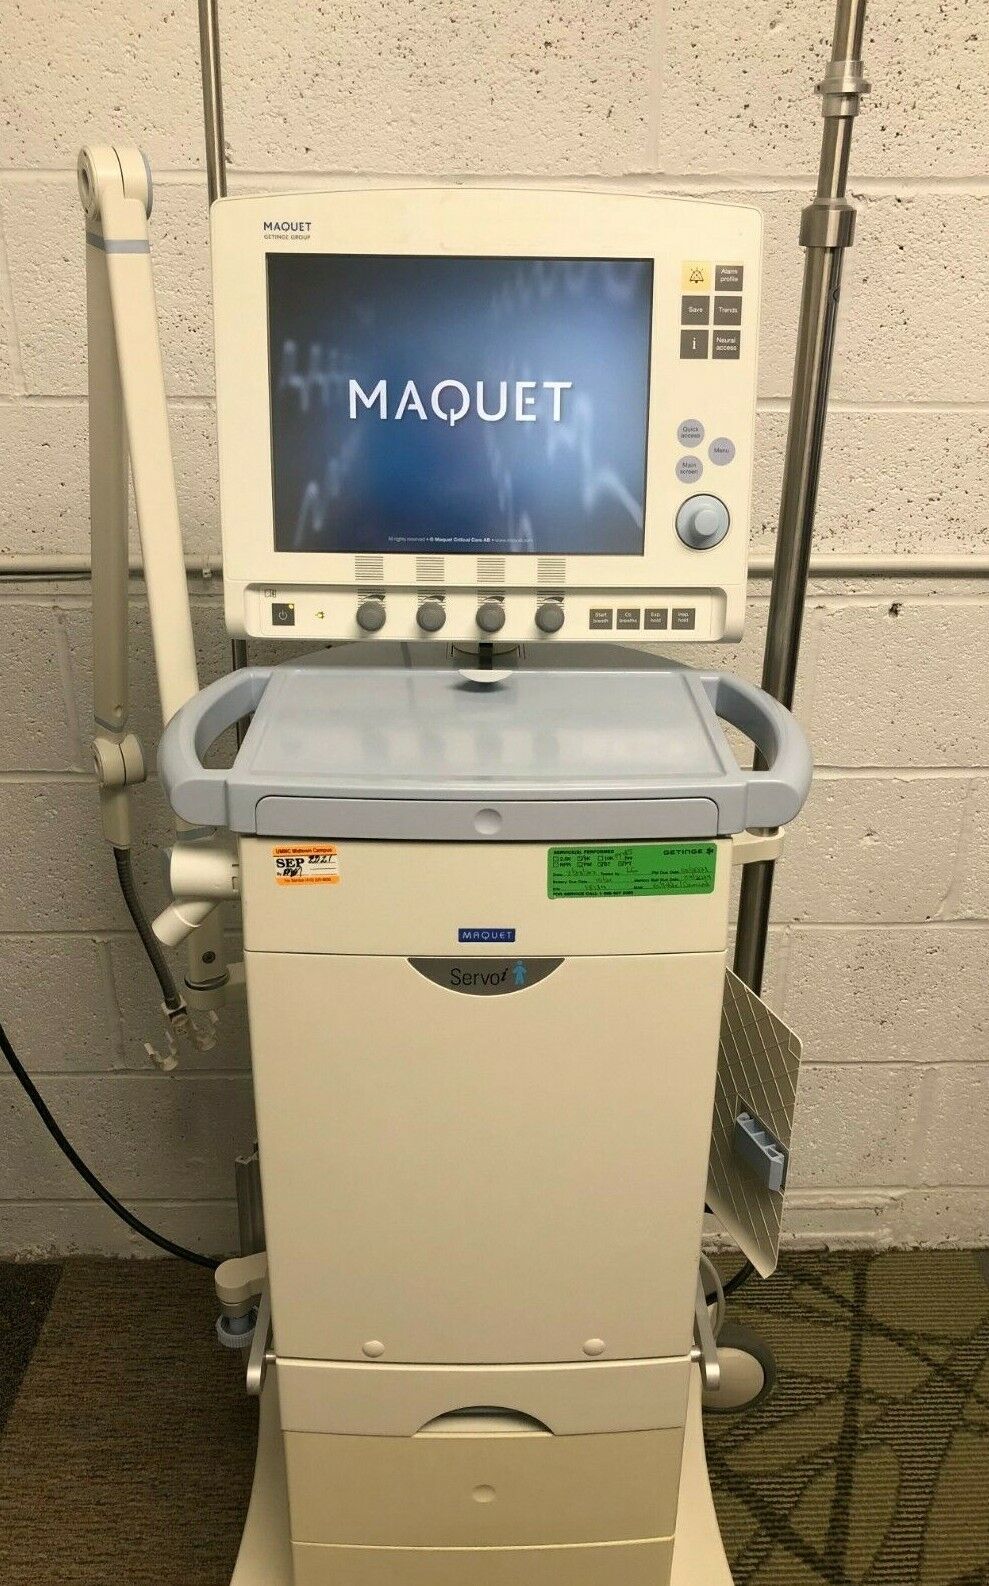 MAQUET Servo i 6487800 Universal Ventilator Biomed Tested